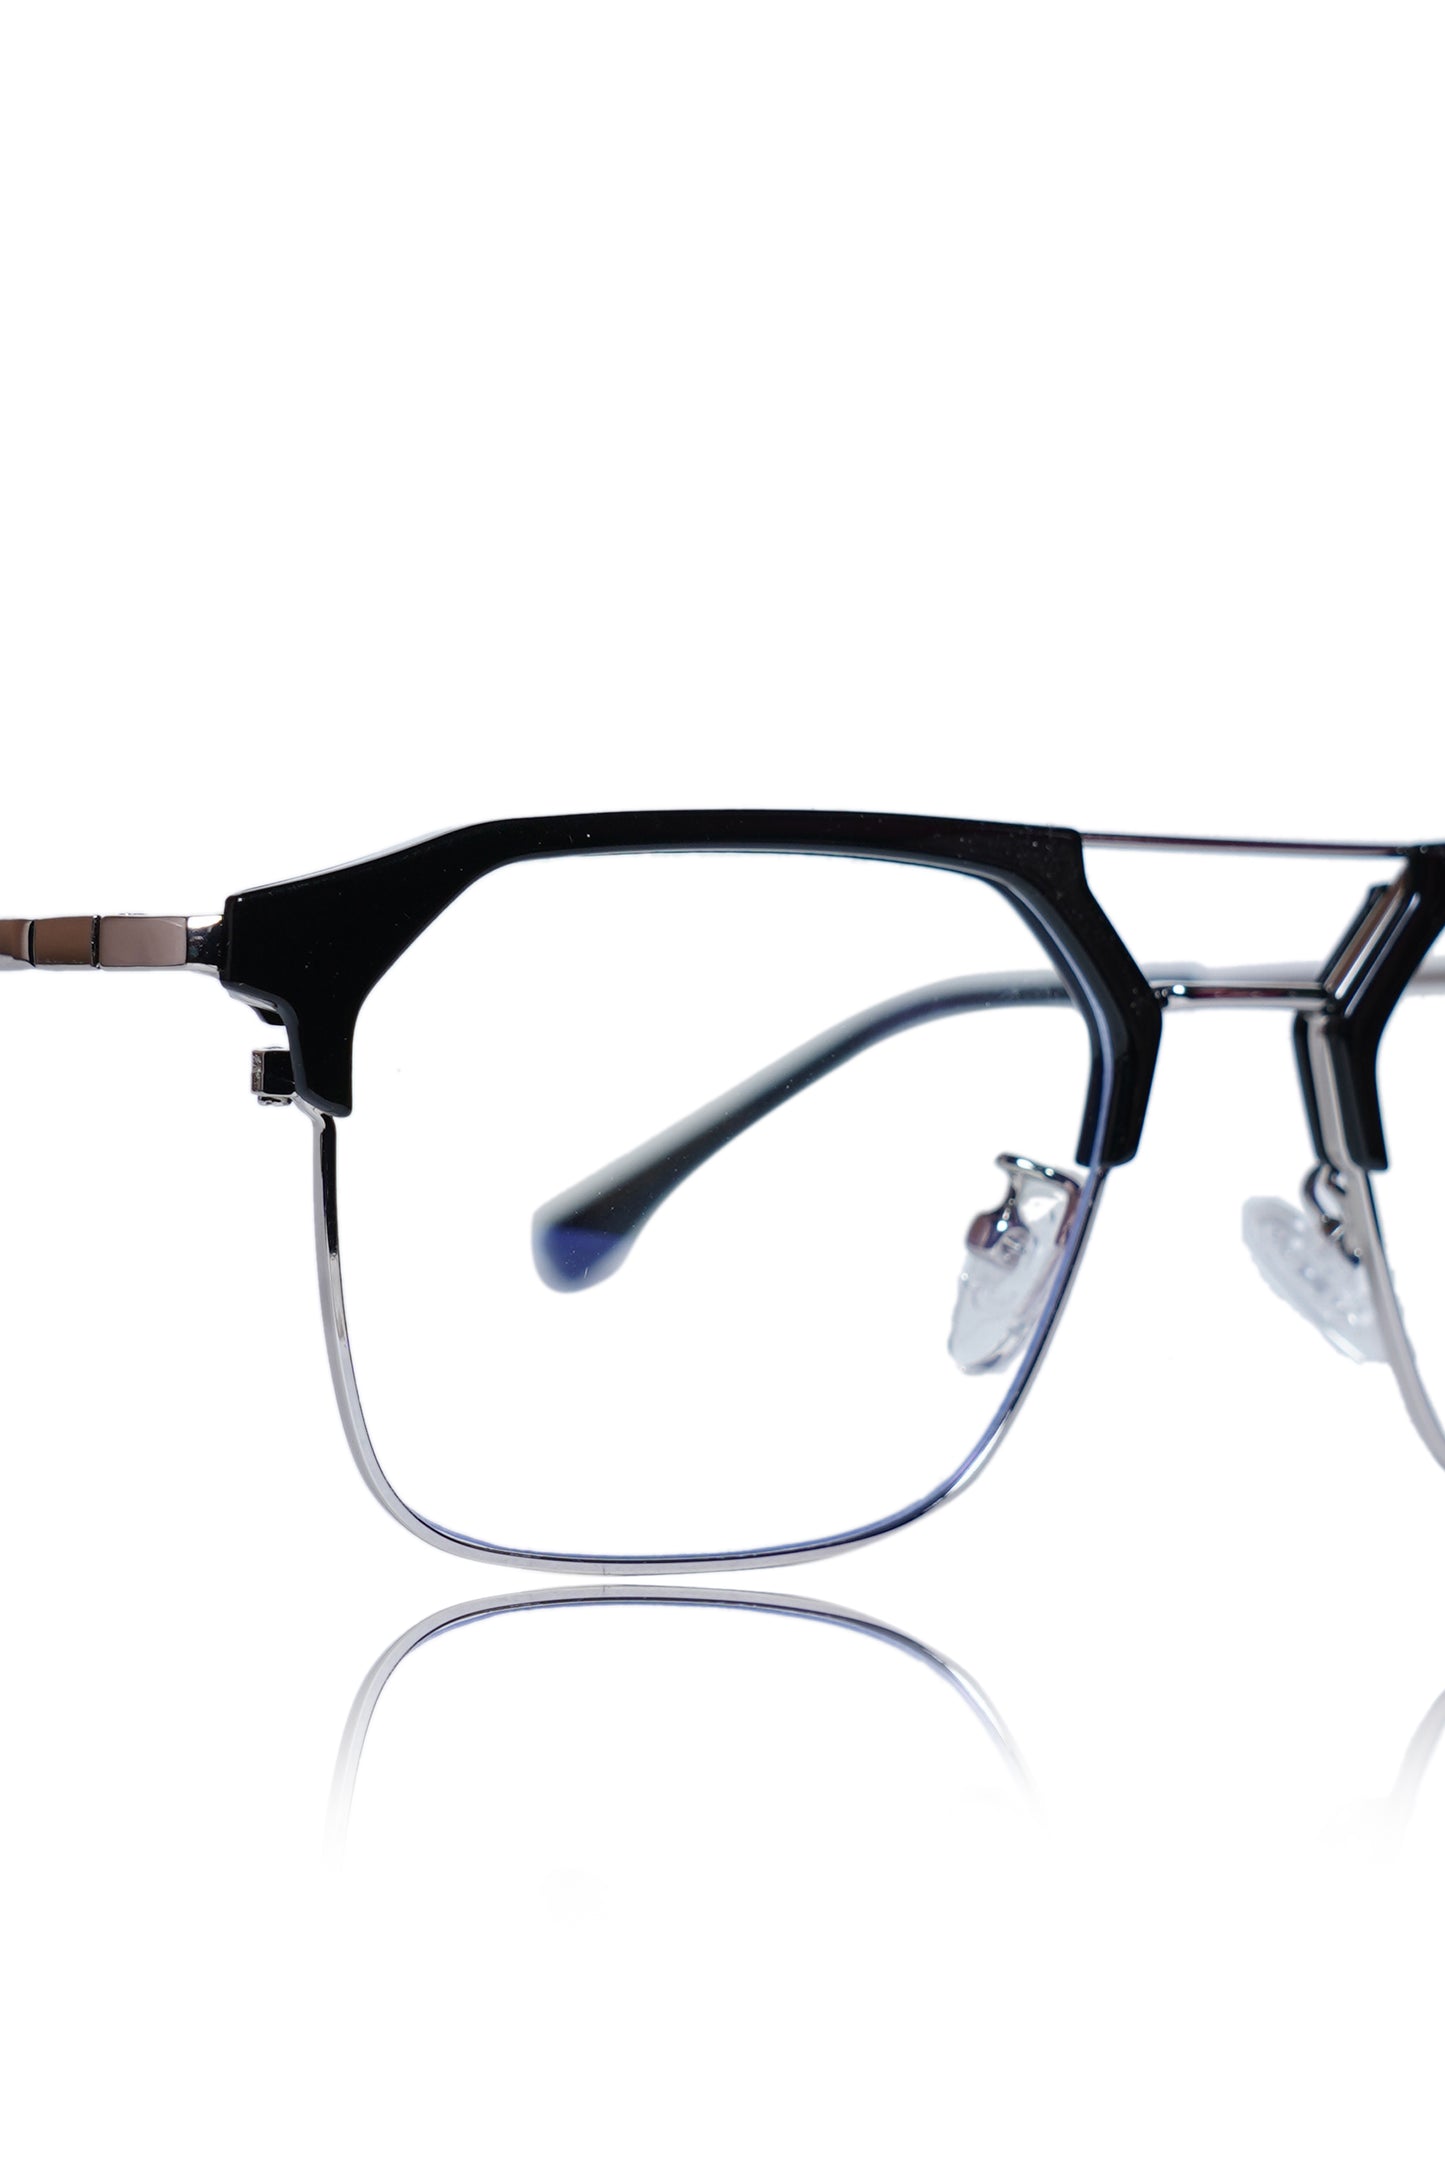 Jodykoes® Premium Series Classic Vintage Eyewear Eyeglasses Spectacles with Blue Light Anti Glare Glasses Frame for Men and Women (Black & Silver)